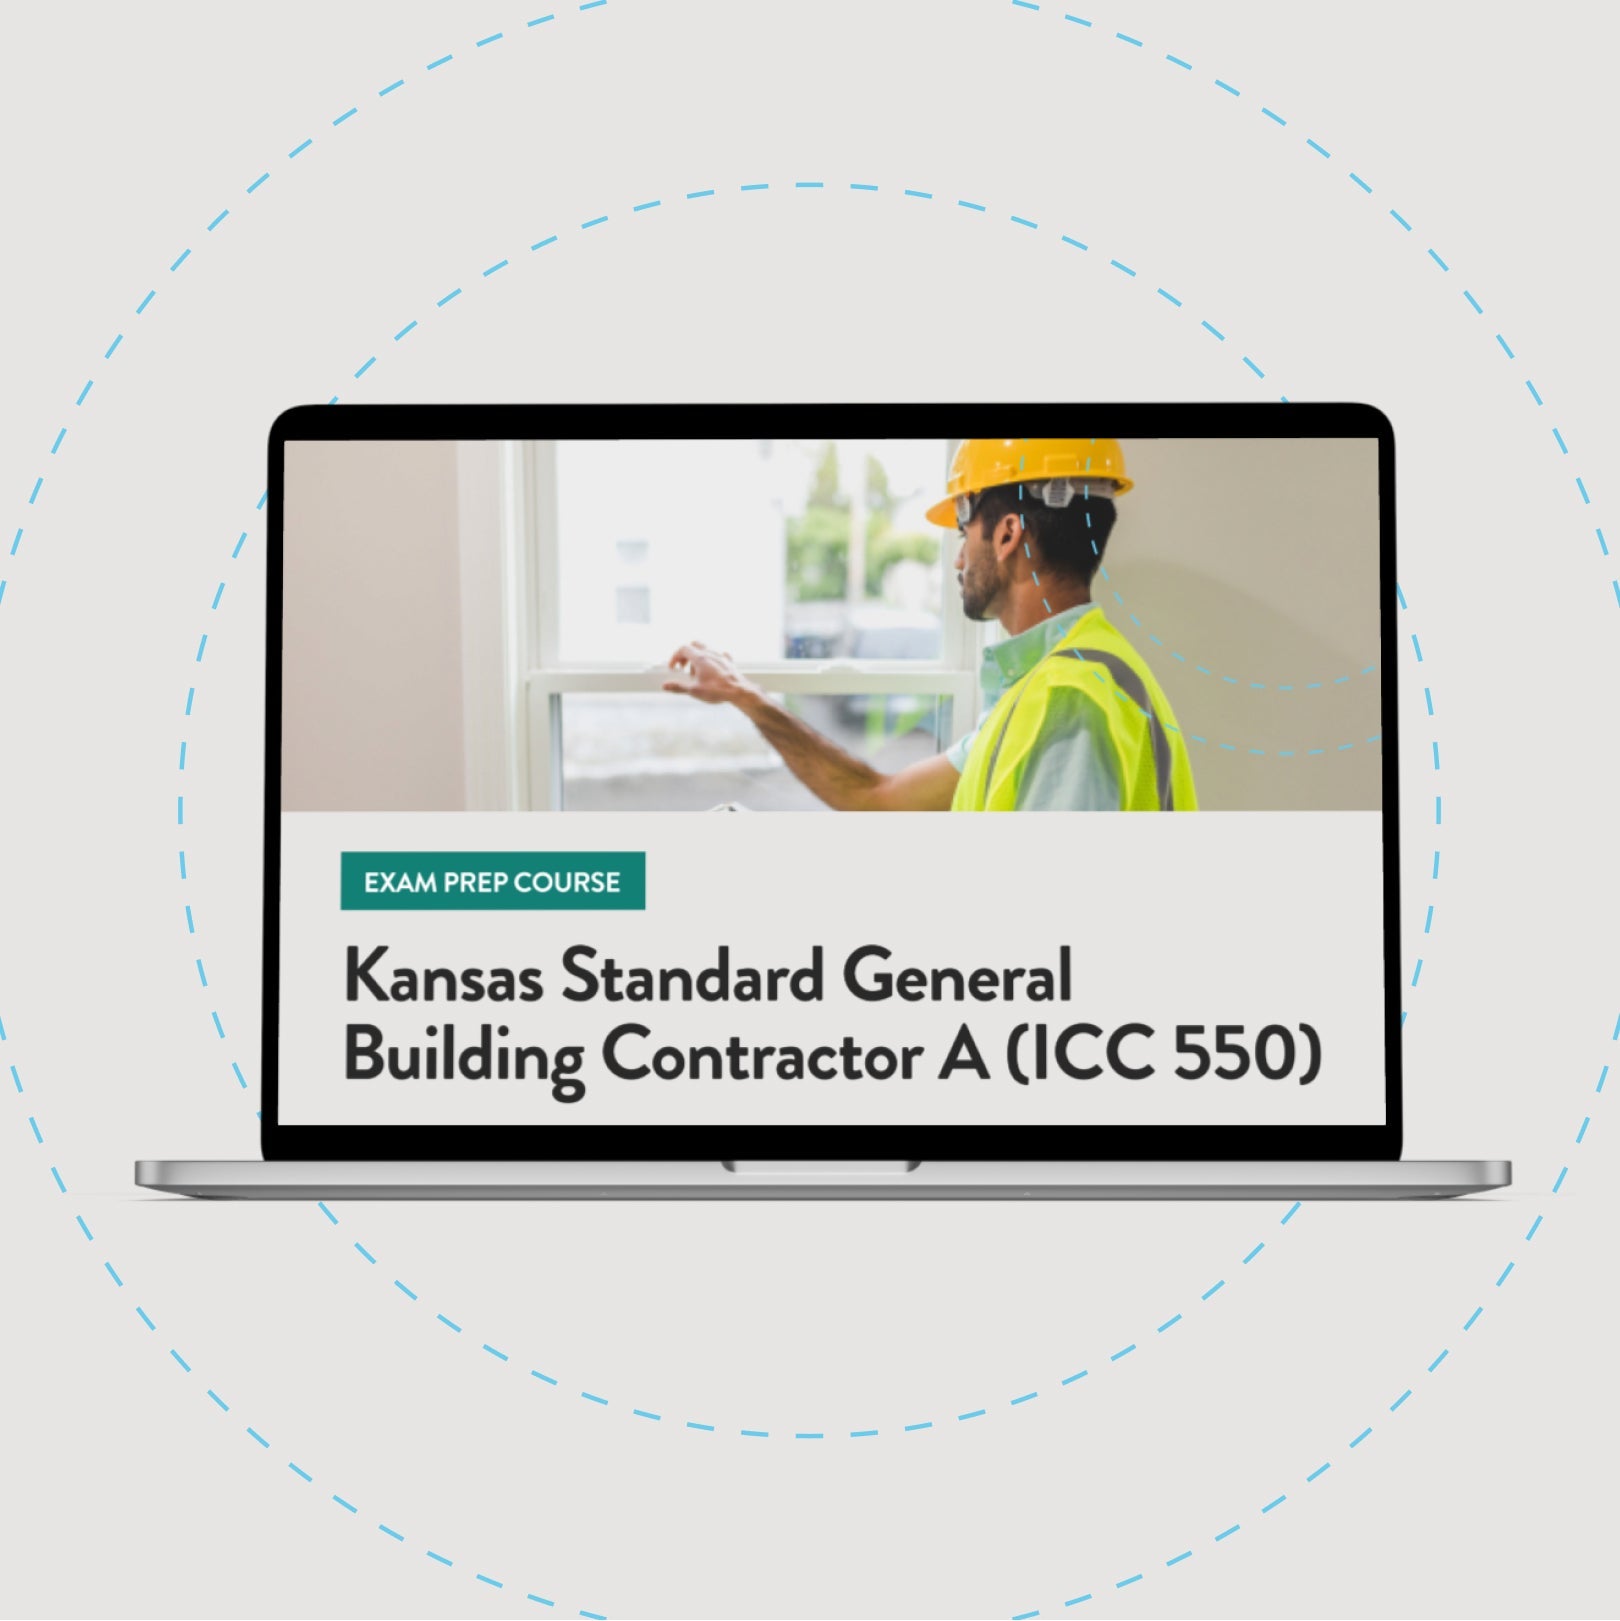 Kansas Standard General Building Contractor A (ICC 550) Exam Prep Course